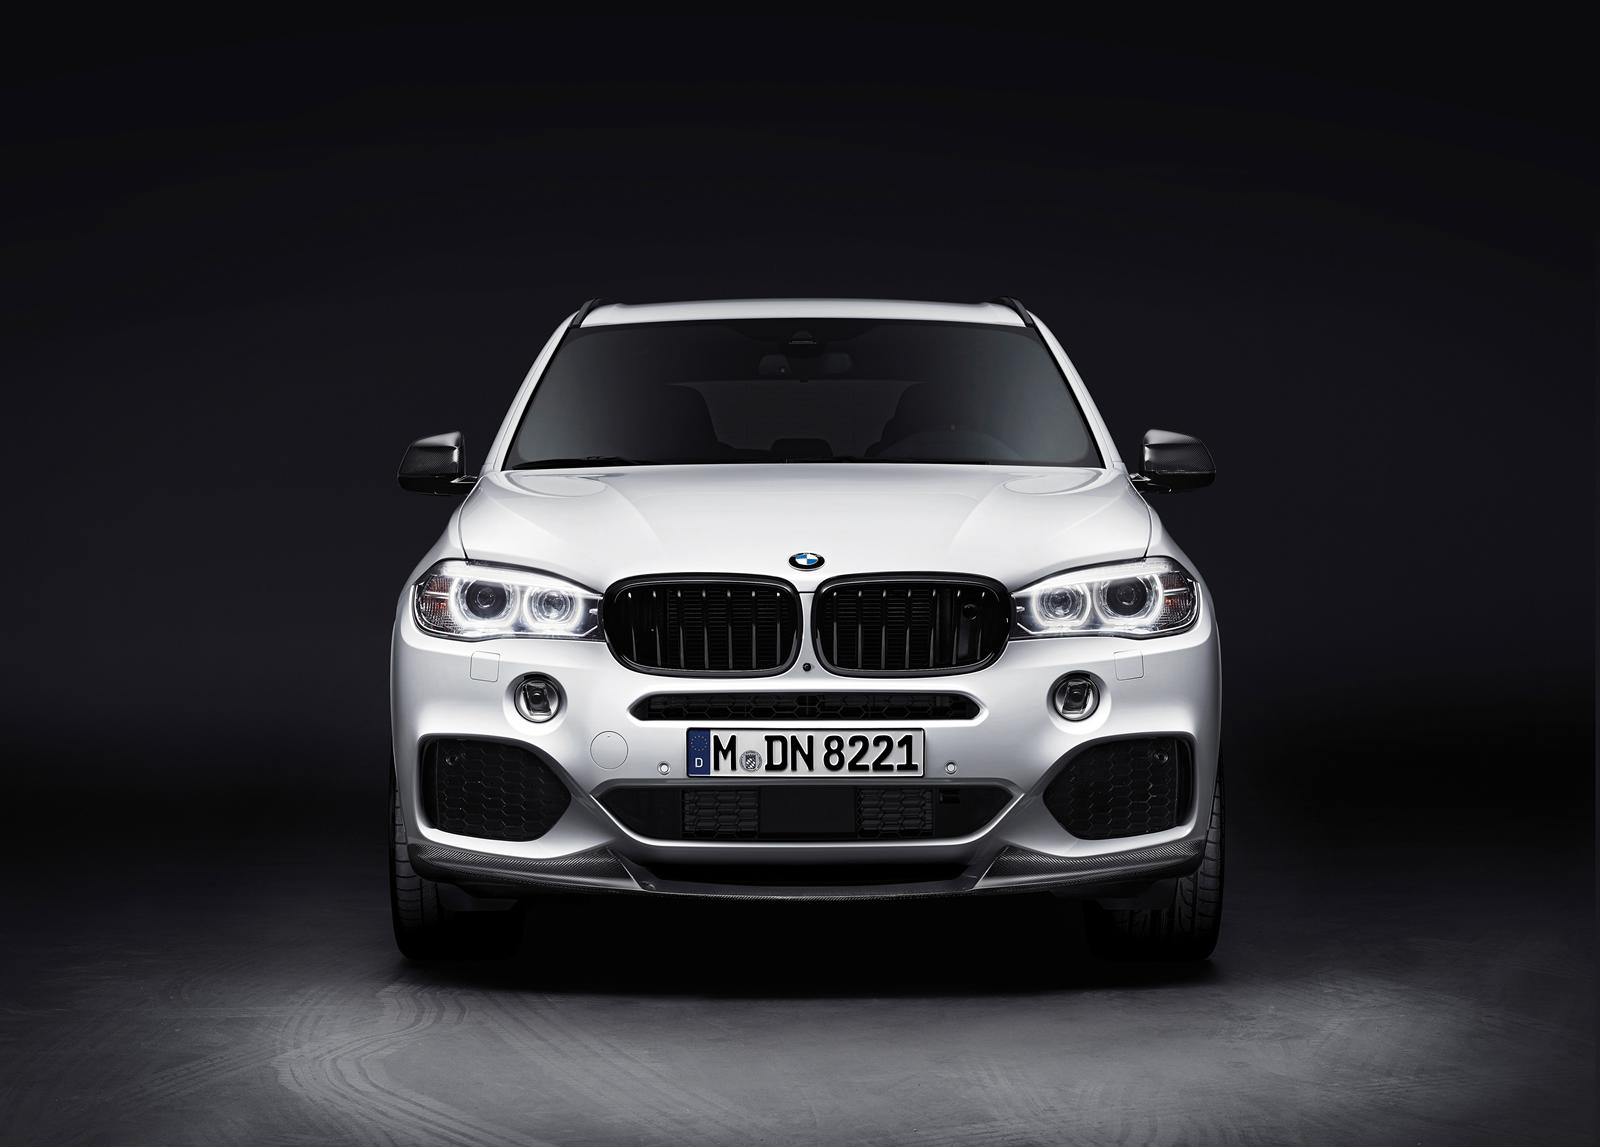 Фото BMW X5 M Performance 2014 салона и кузова в хорошем качестве